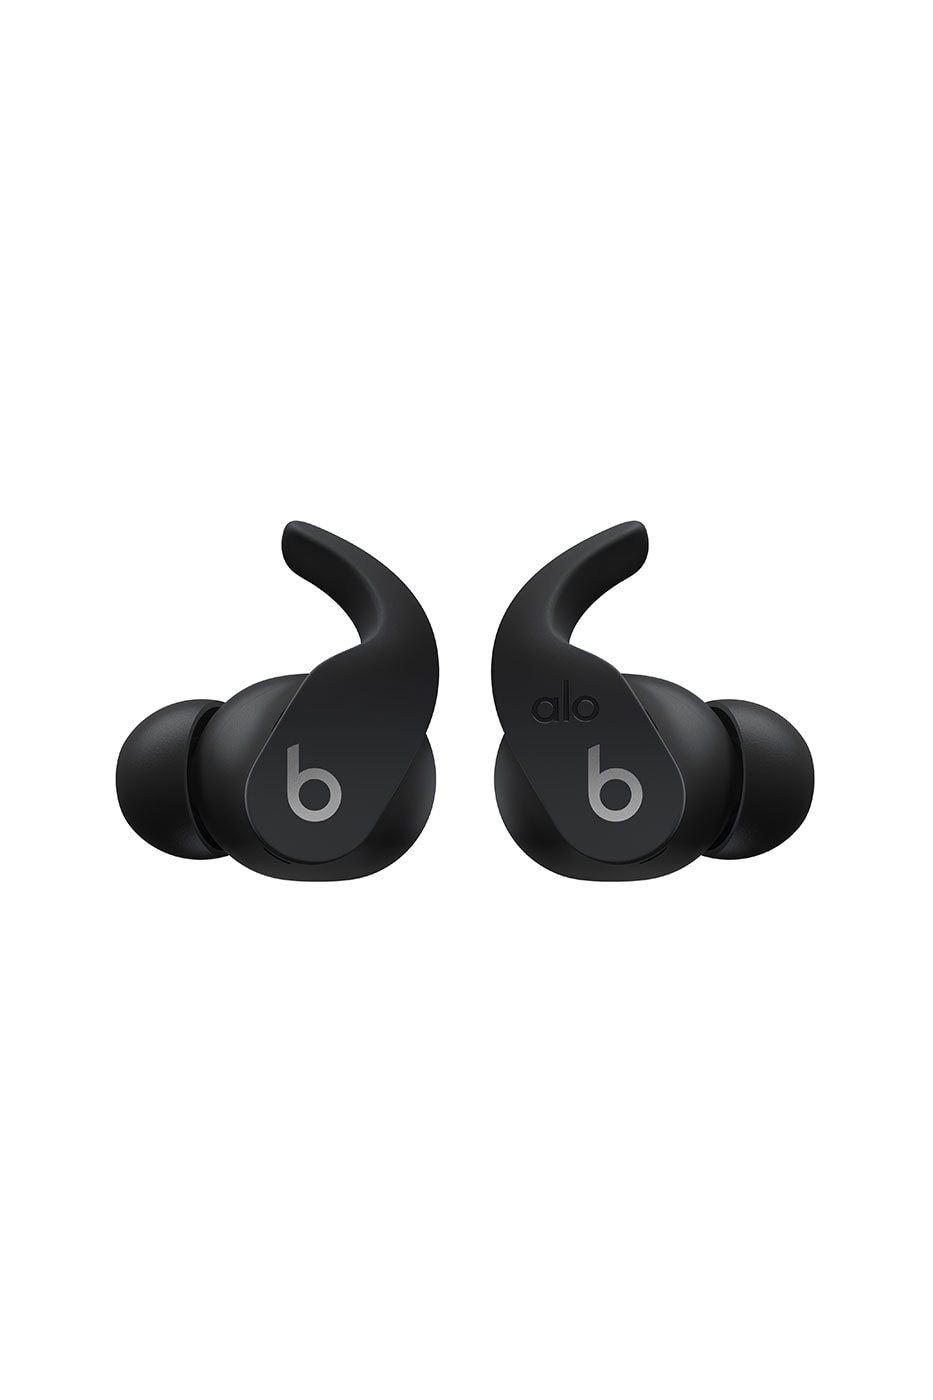 Beats by Dre Alo Yoga Special Edition Fit Pro Earphones Release Info